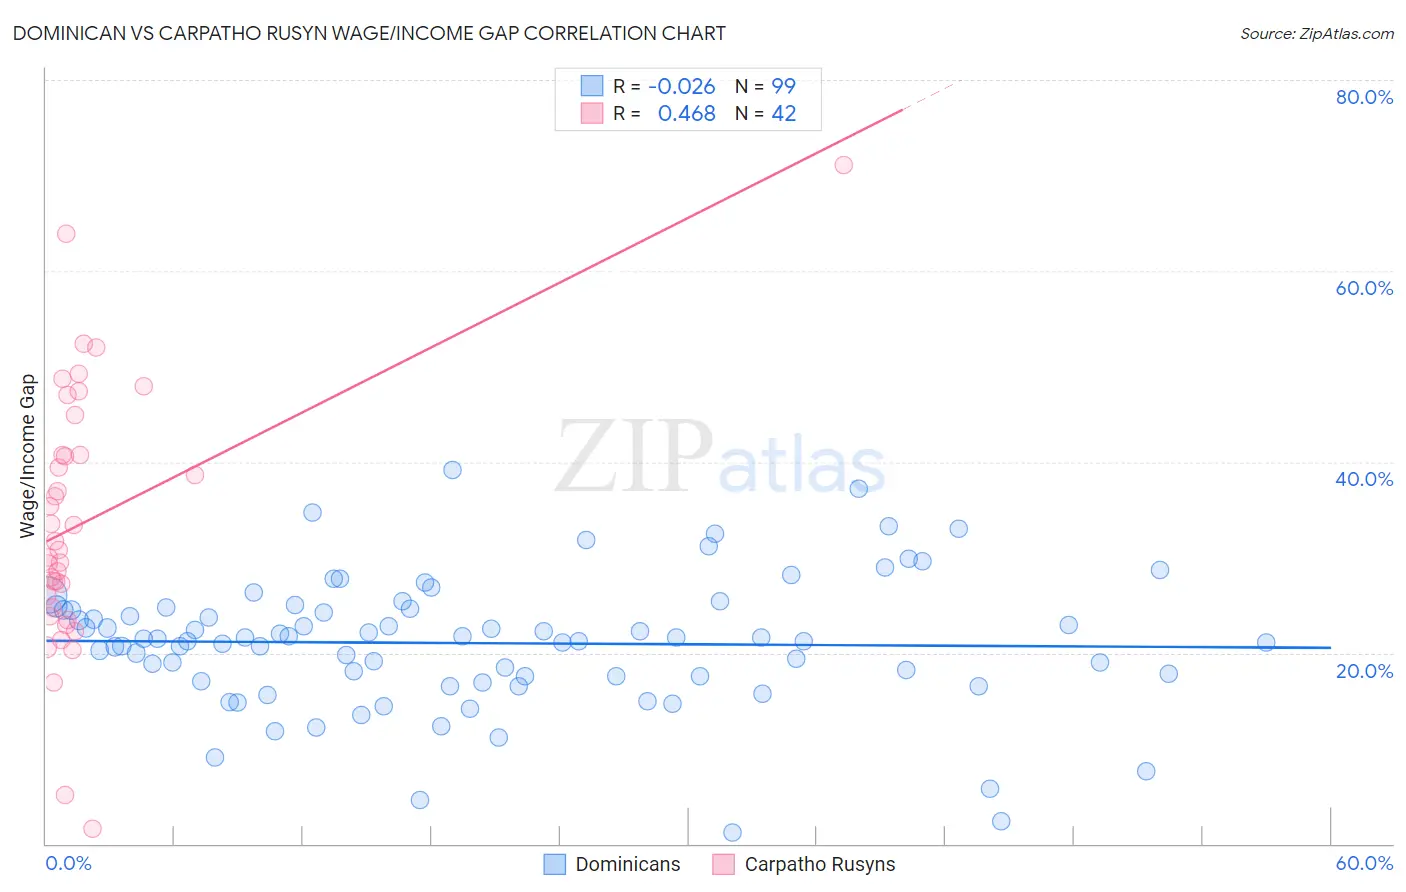 Dominican vs Carpatho Rusyn Wage/Income Gap